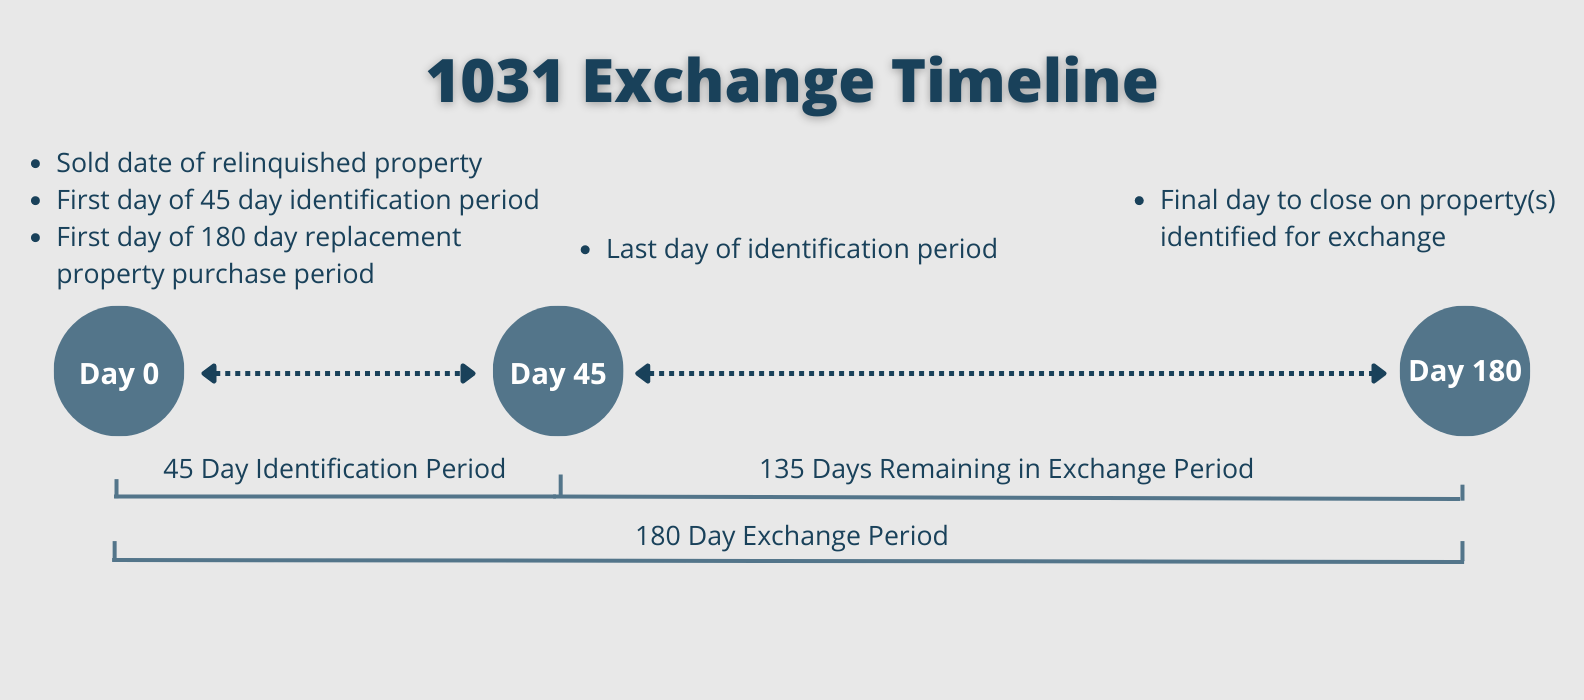 1031 Exchange Timeline explanation